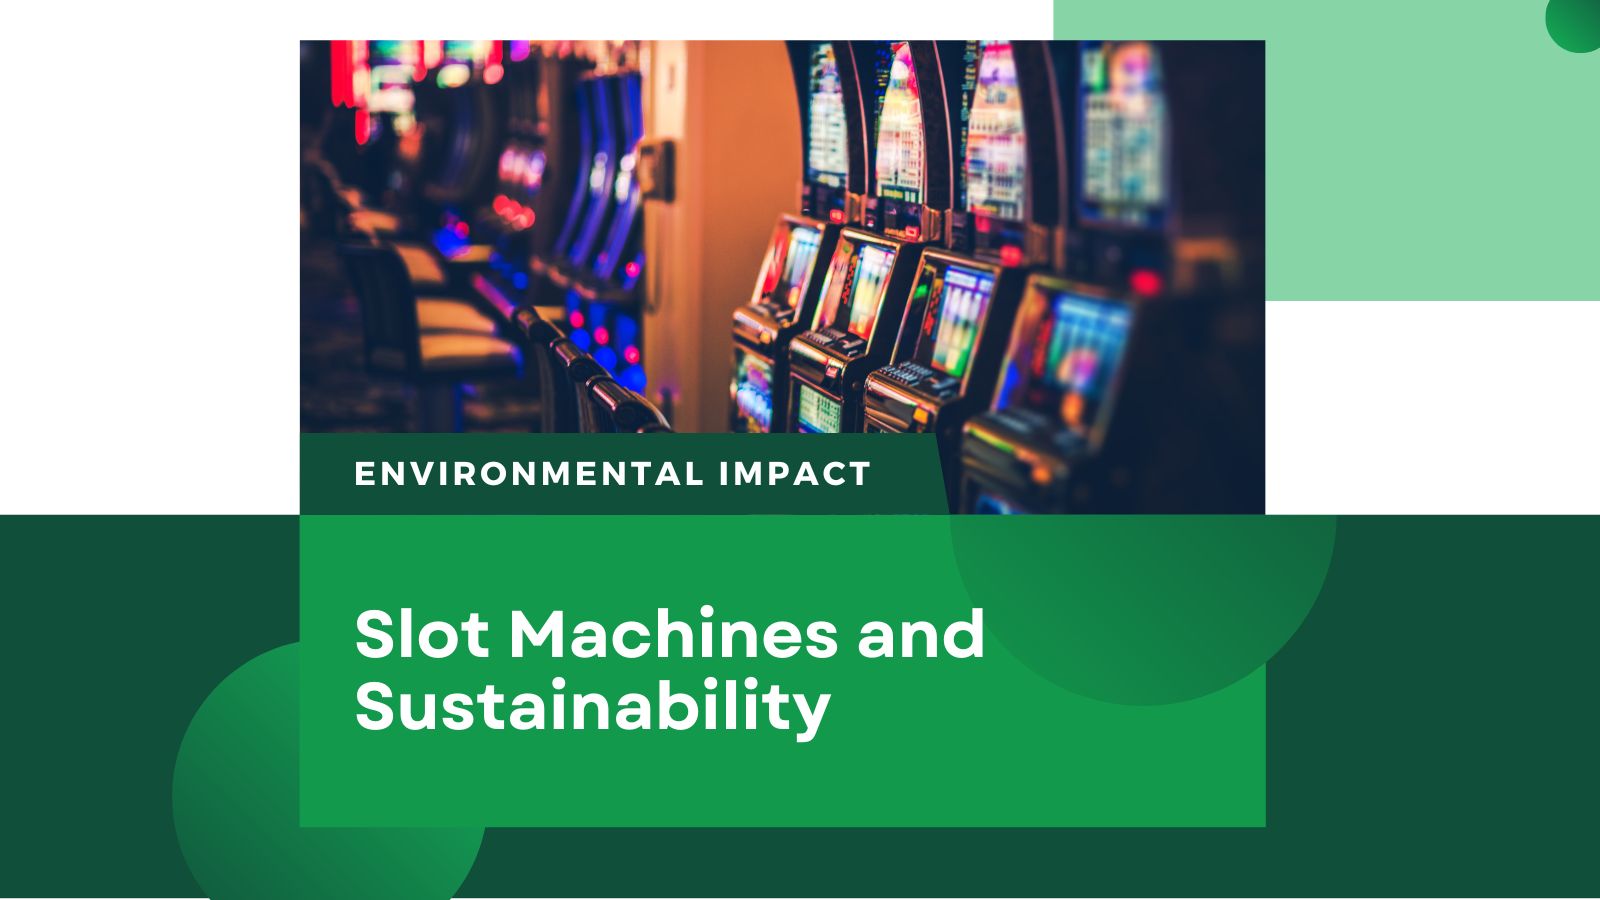 The Environmental Impact of Slot Machines